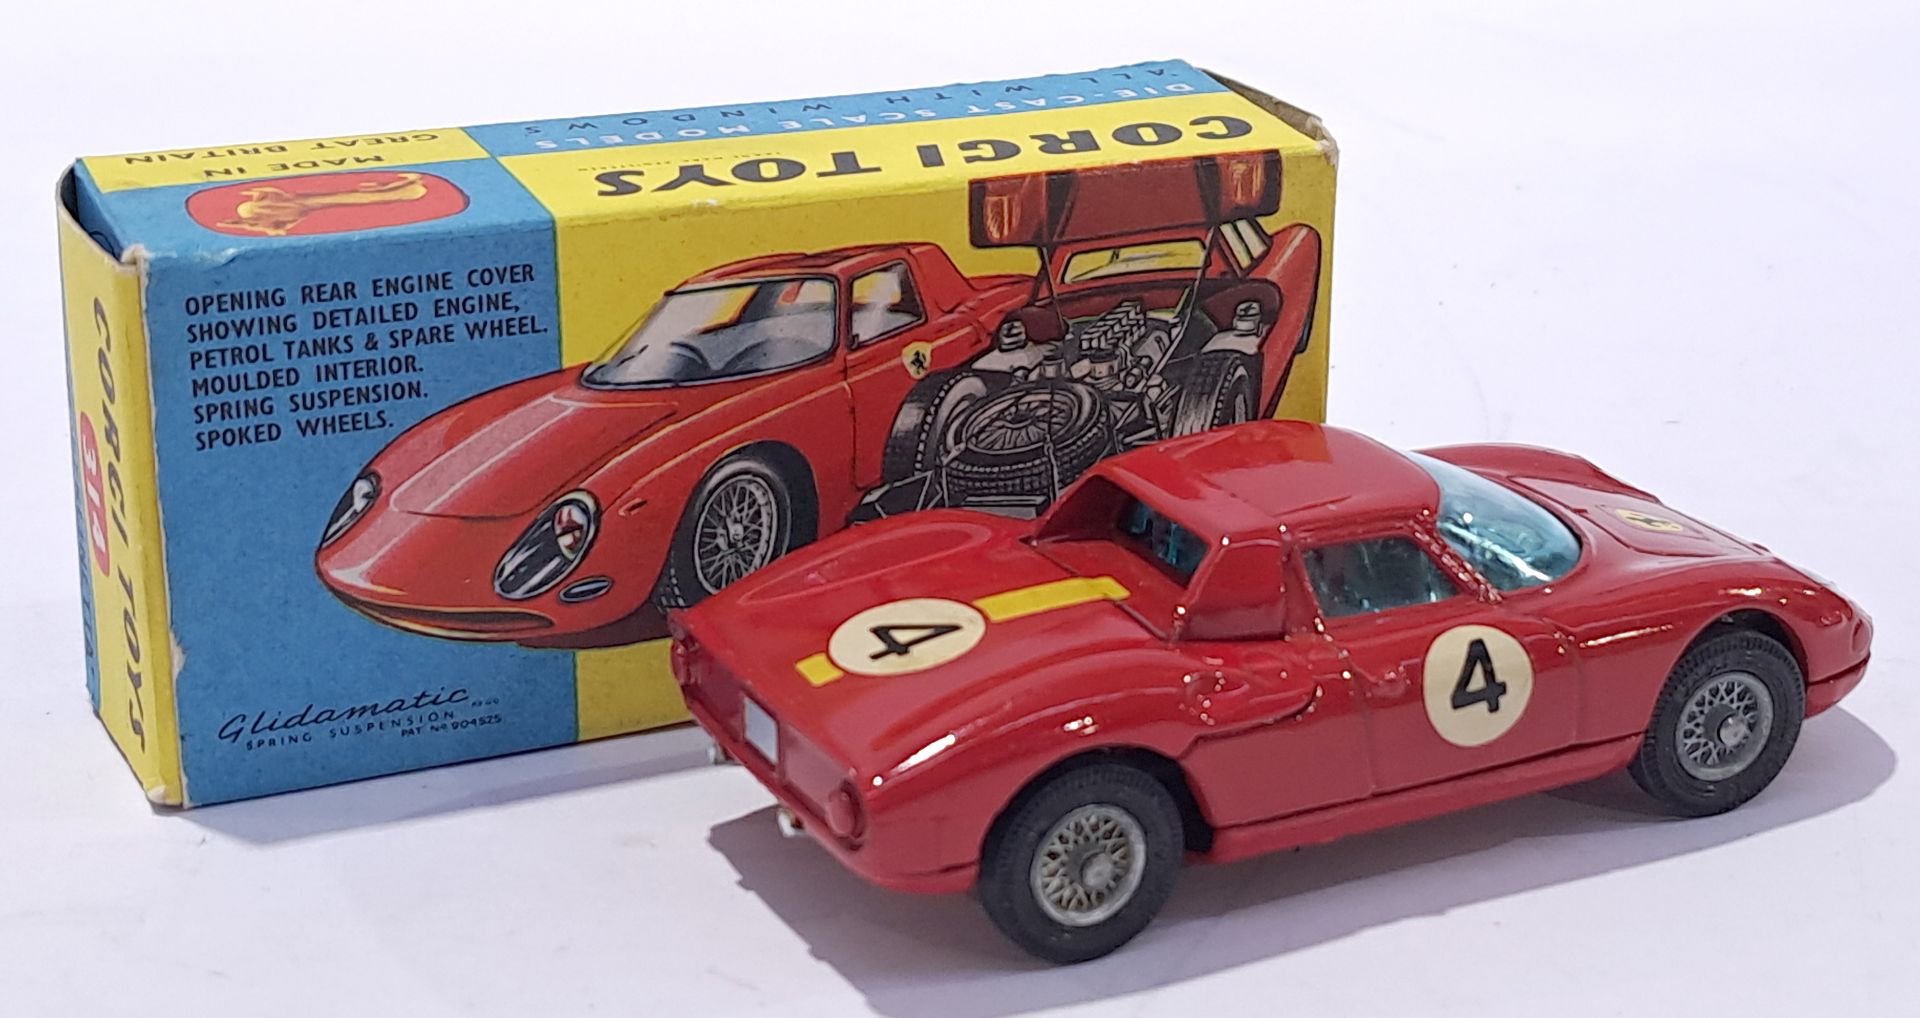 Corgi Toys 314 Ferrari Berlinetta 250 Le mans Racing Car - Red body, wire wheels and racing No.4. - Bild 2 aus 2